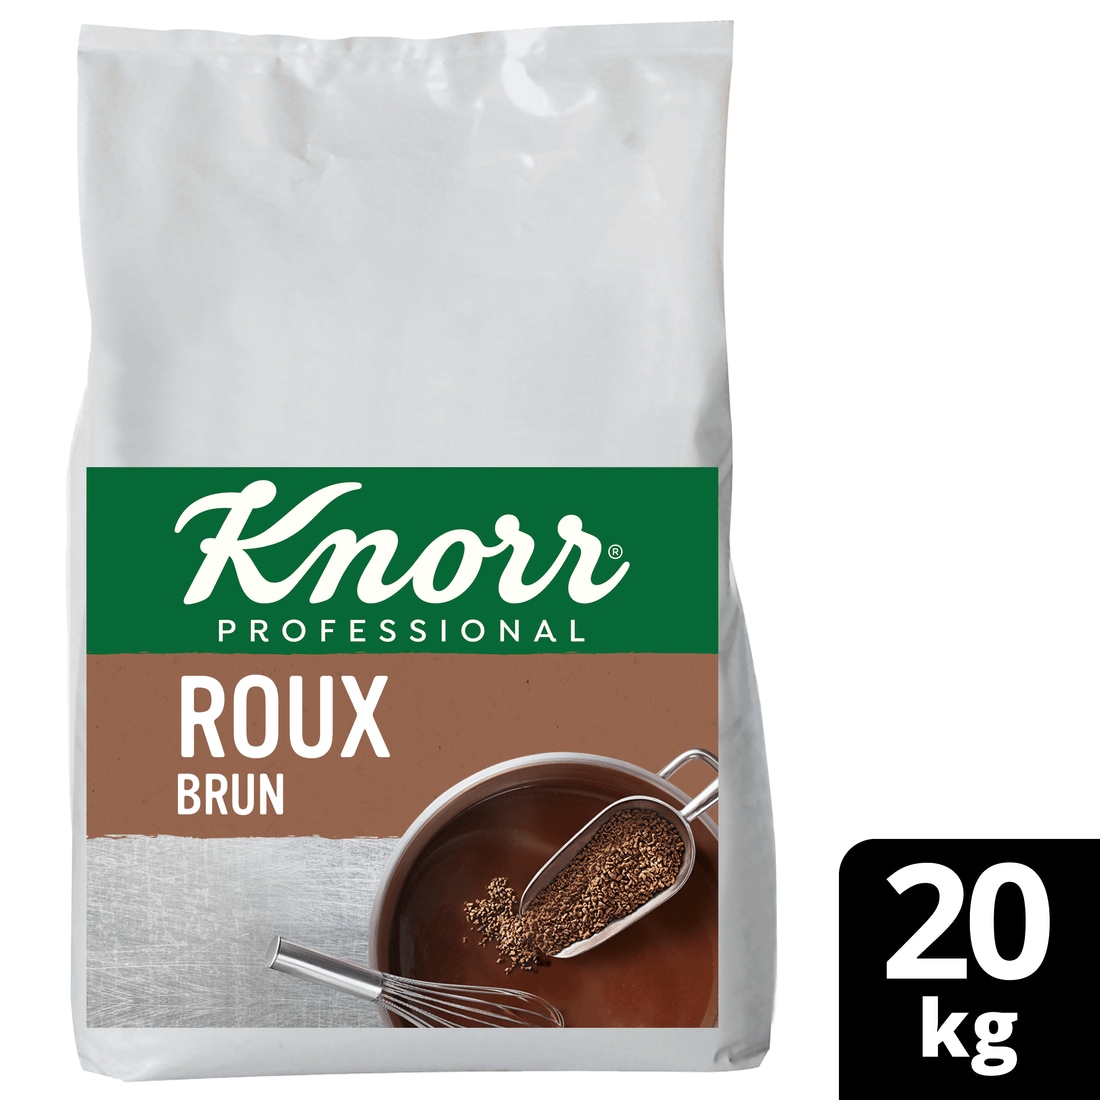 Knorr Fonds de Cuisine Bruine Roux Korrels 20 kg - 